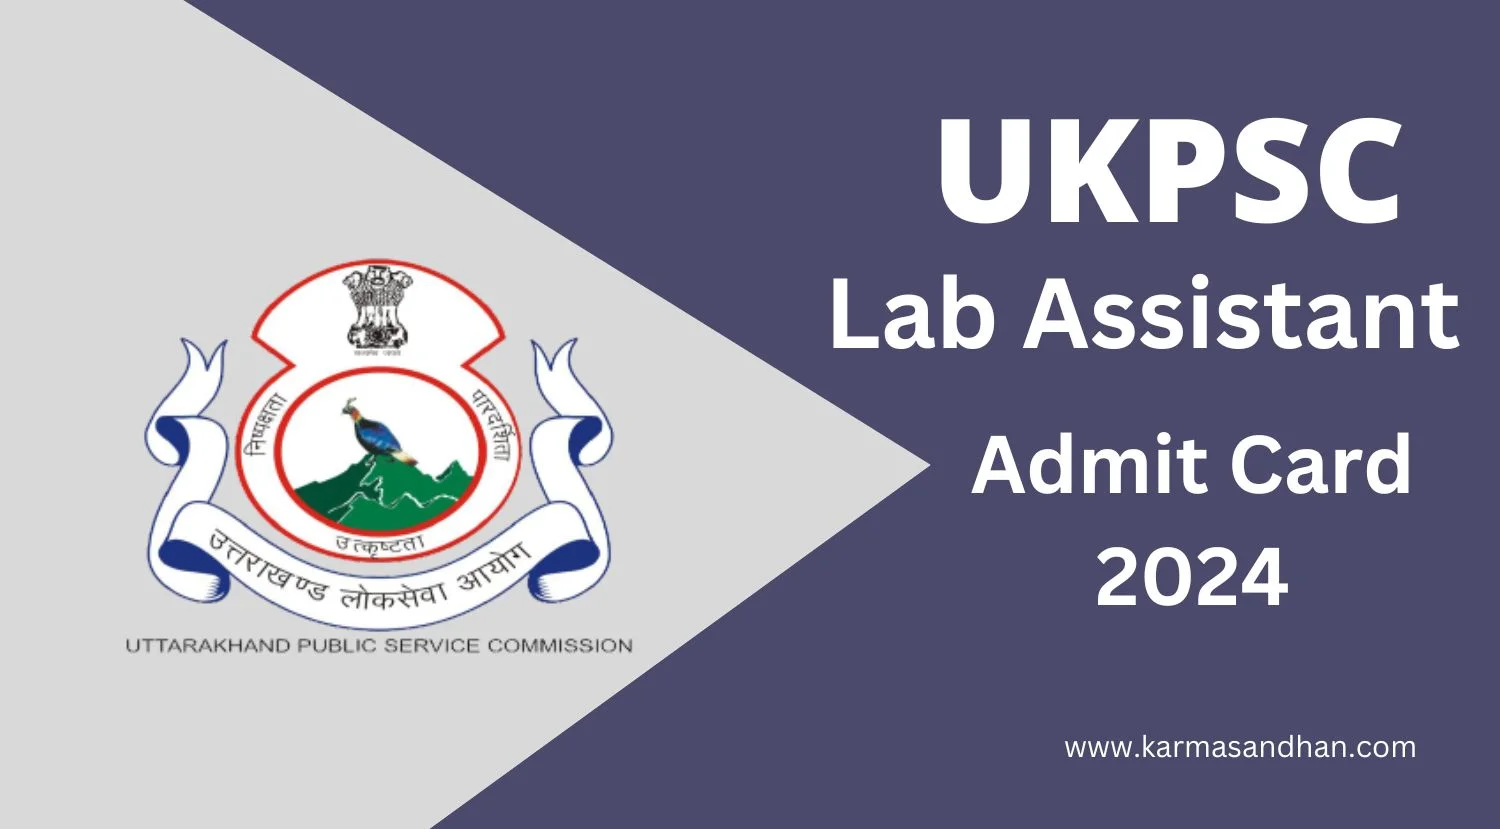 UKPSC Lab Assistant Admit Card 2024